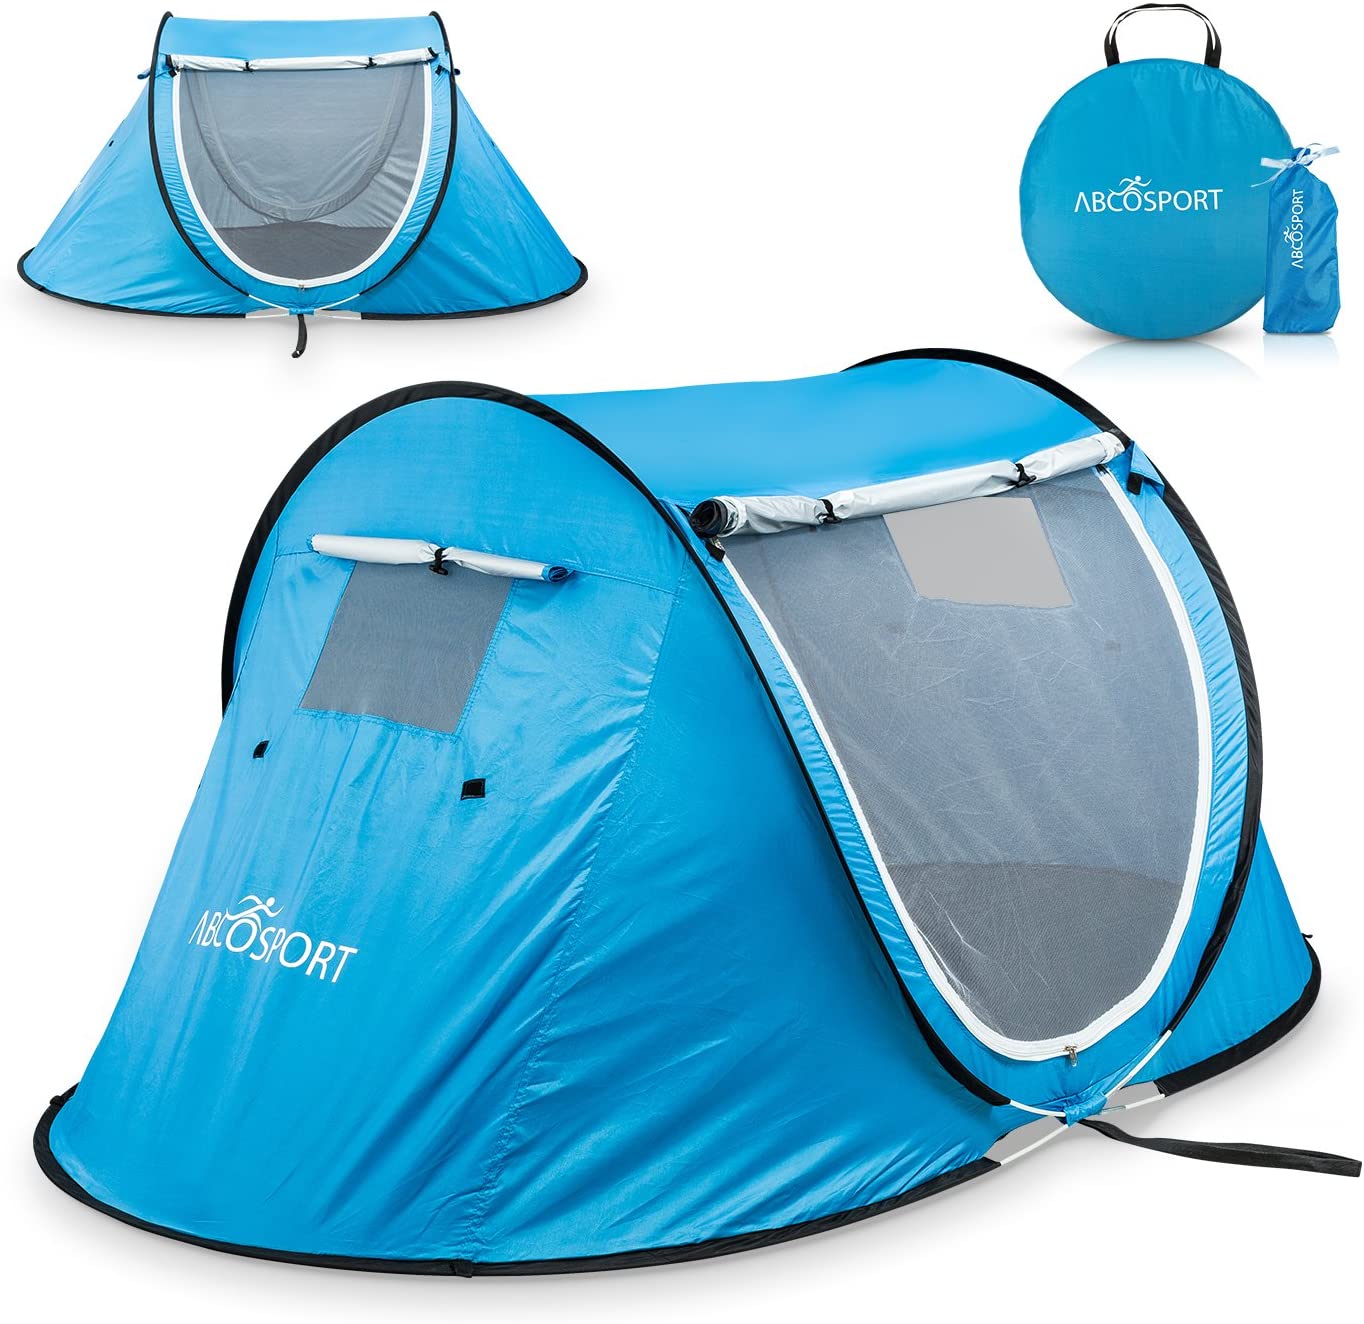 ABCOSPORT beach camping tent